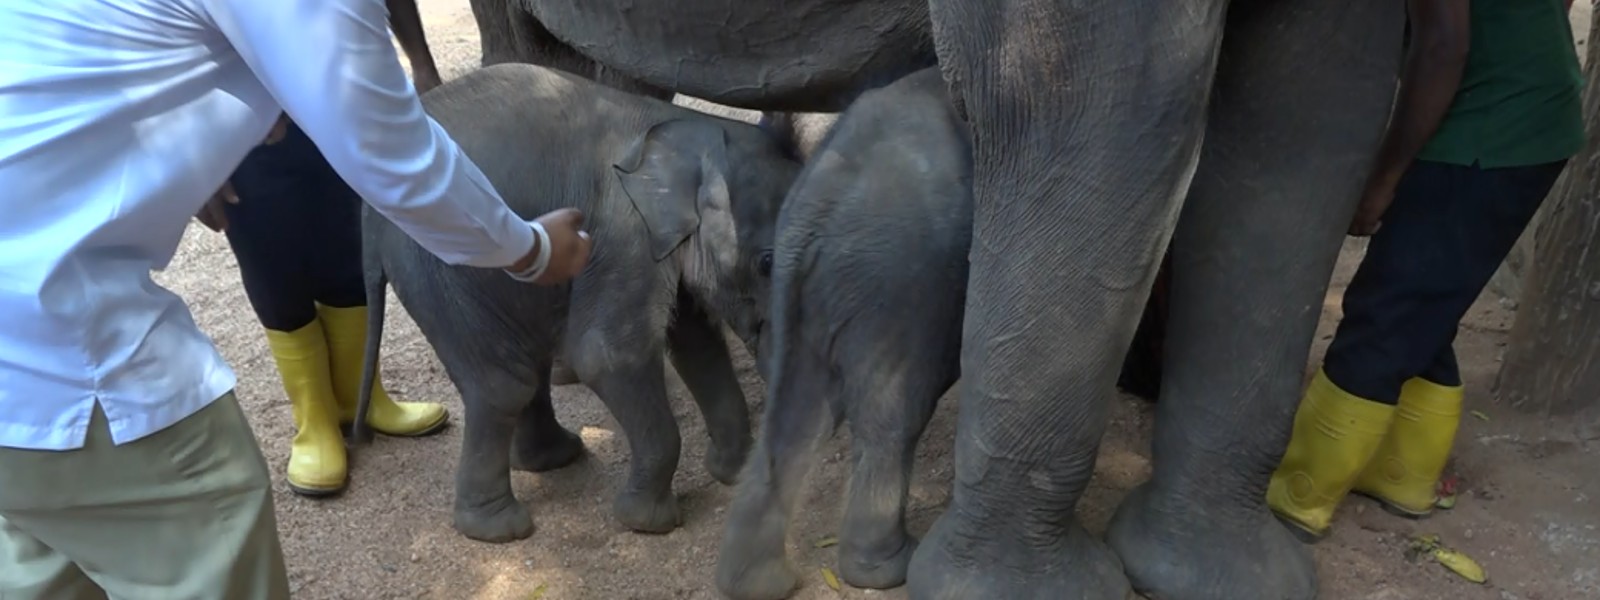 Sri Lanka officially names twin elephant calves